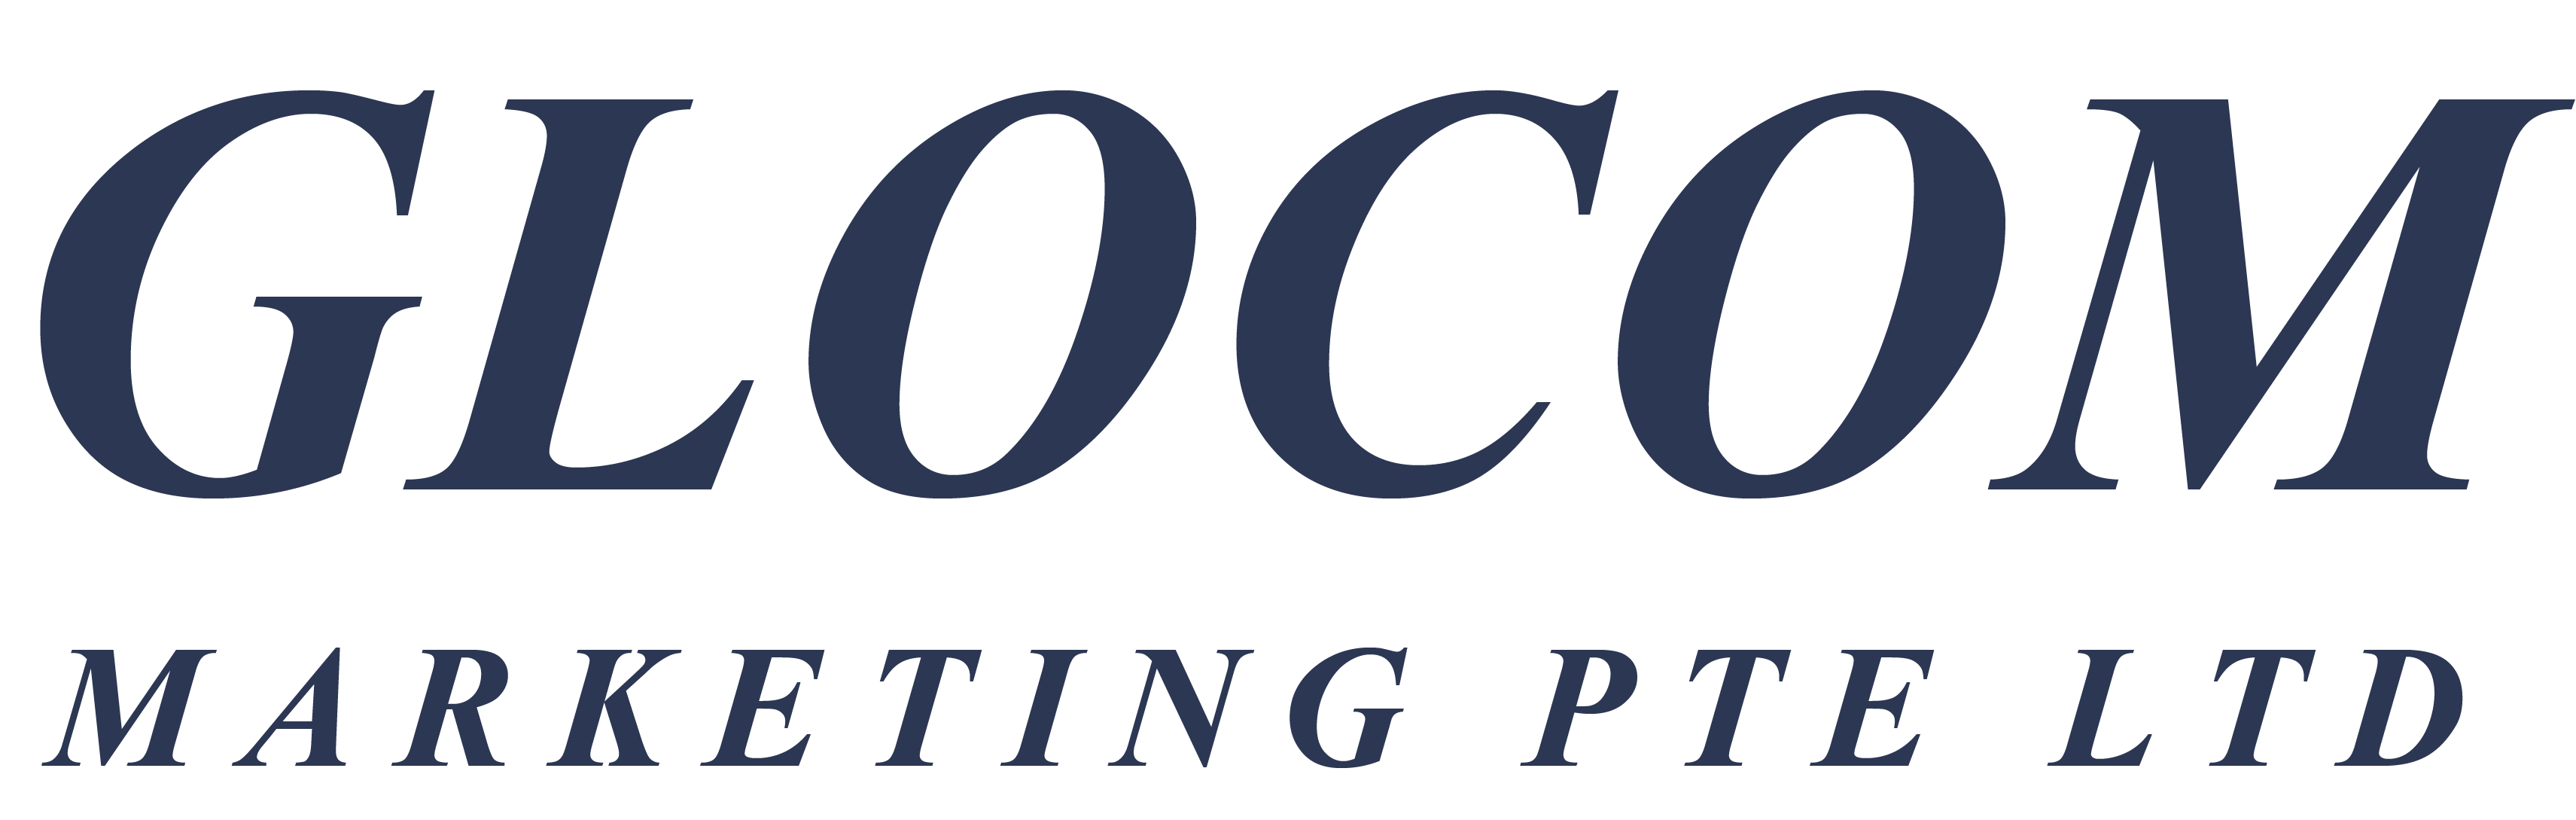 Glocom Marketing Pte Ltd logo